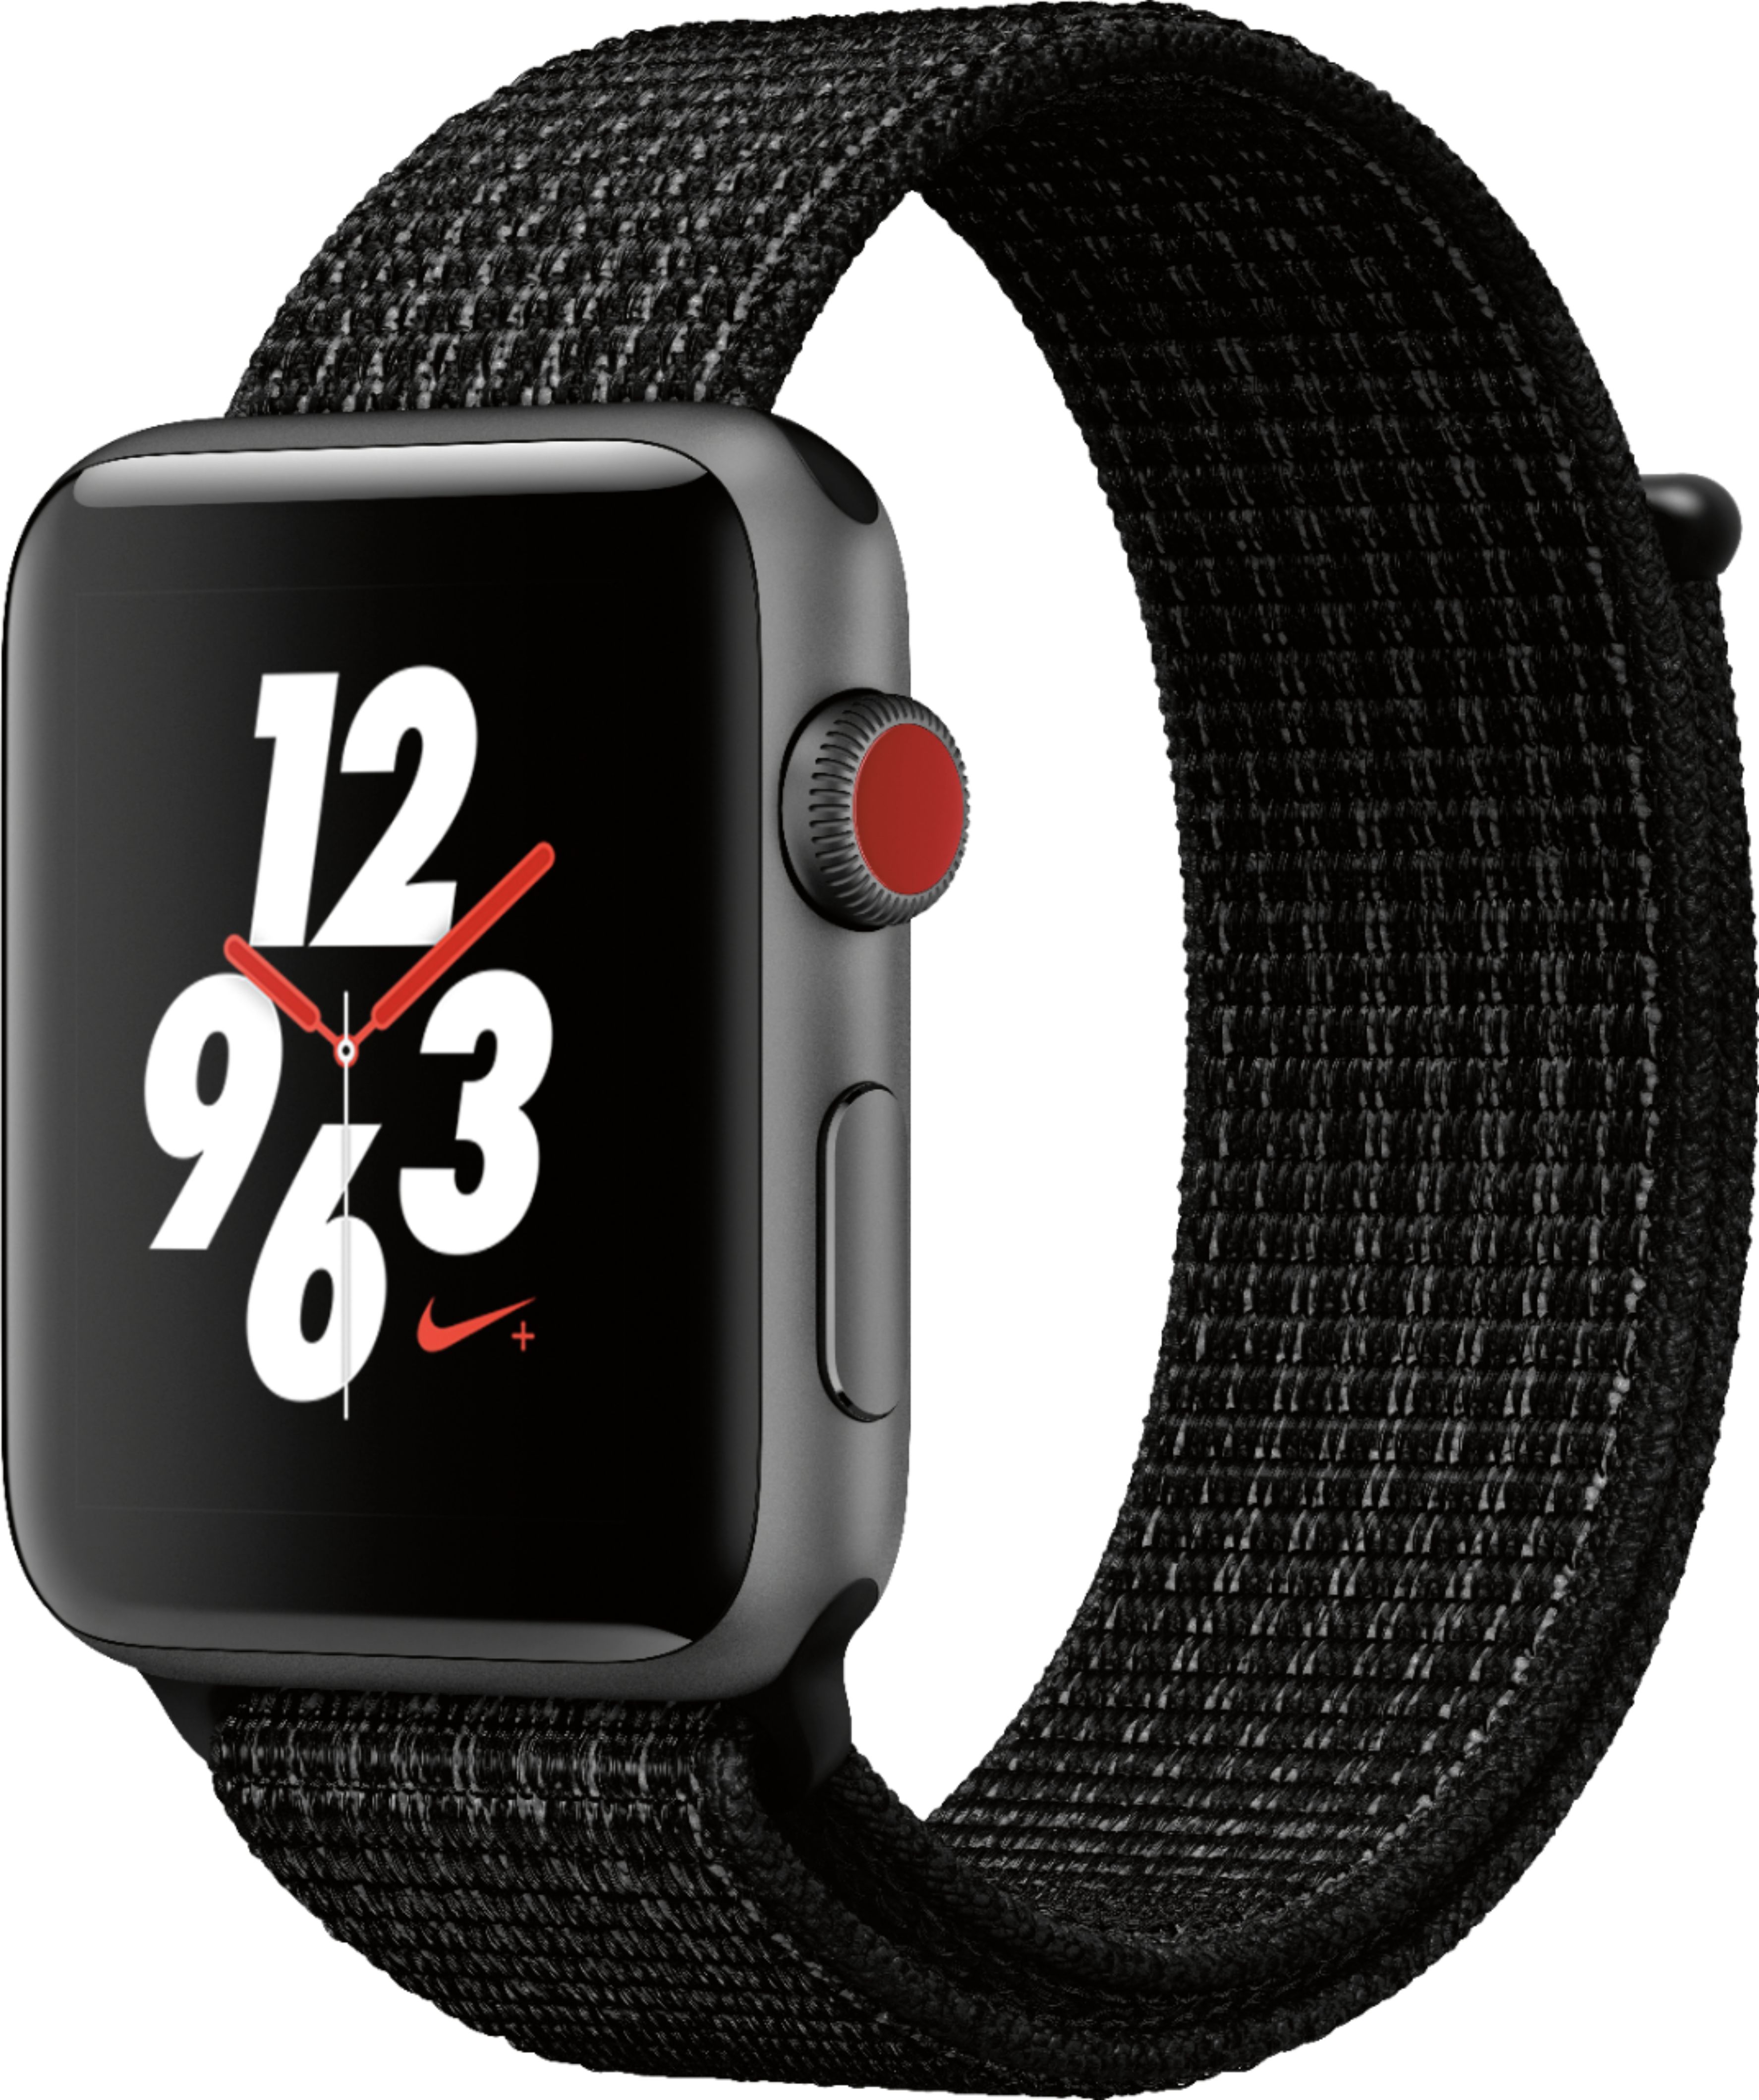 apple watch nike series 3 price